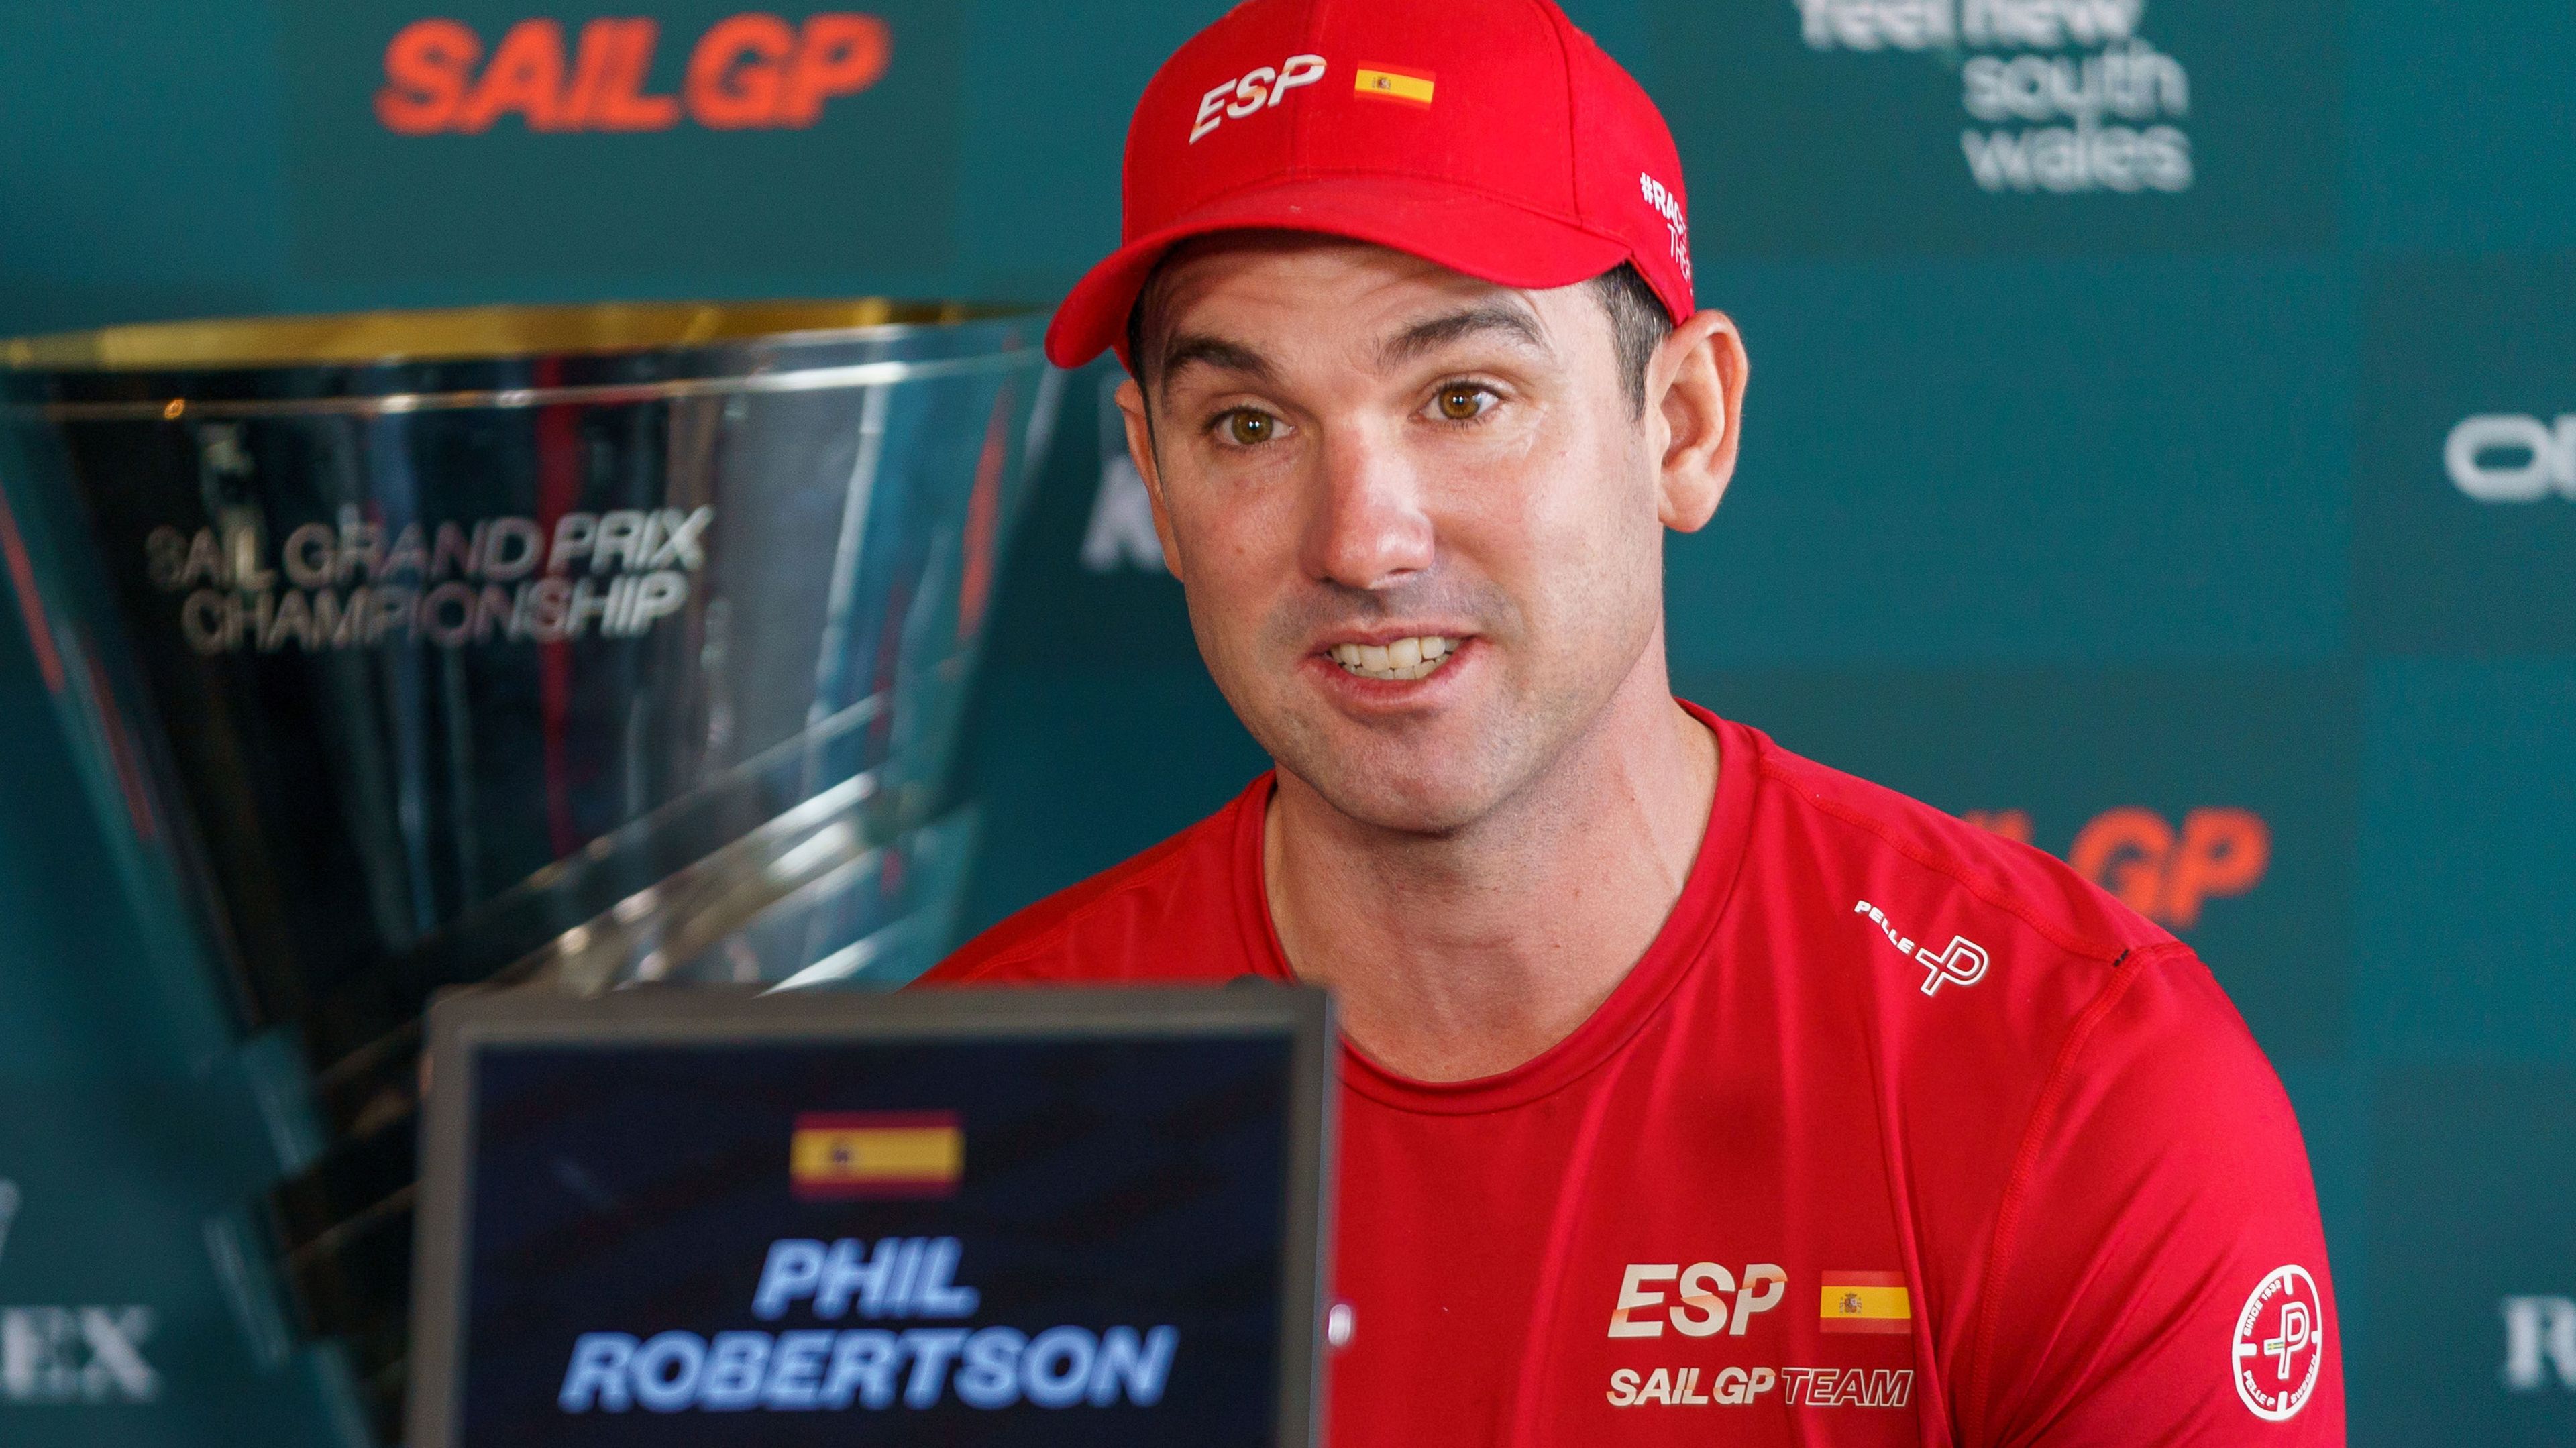 Former Spain SailGP driver Phil Robertson addresses the media during the Sydney Grand Prix in December 2021.